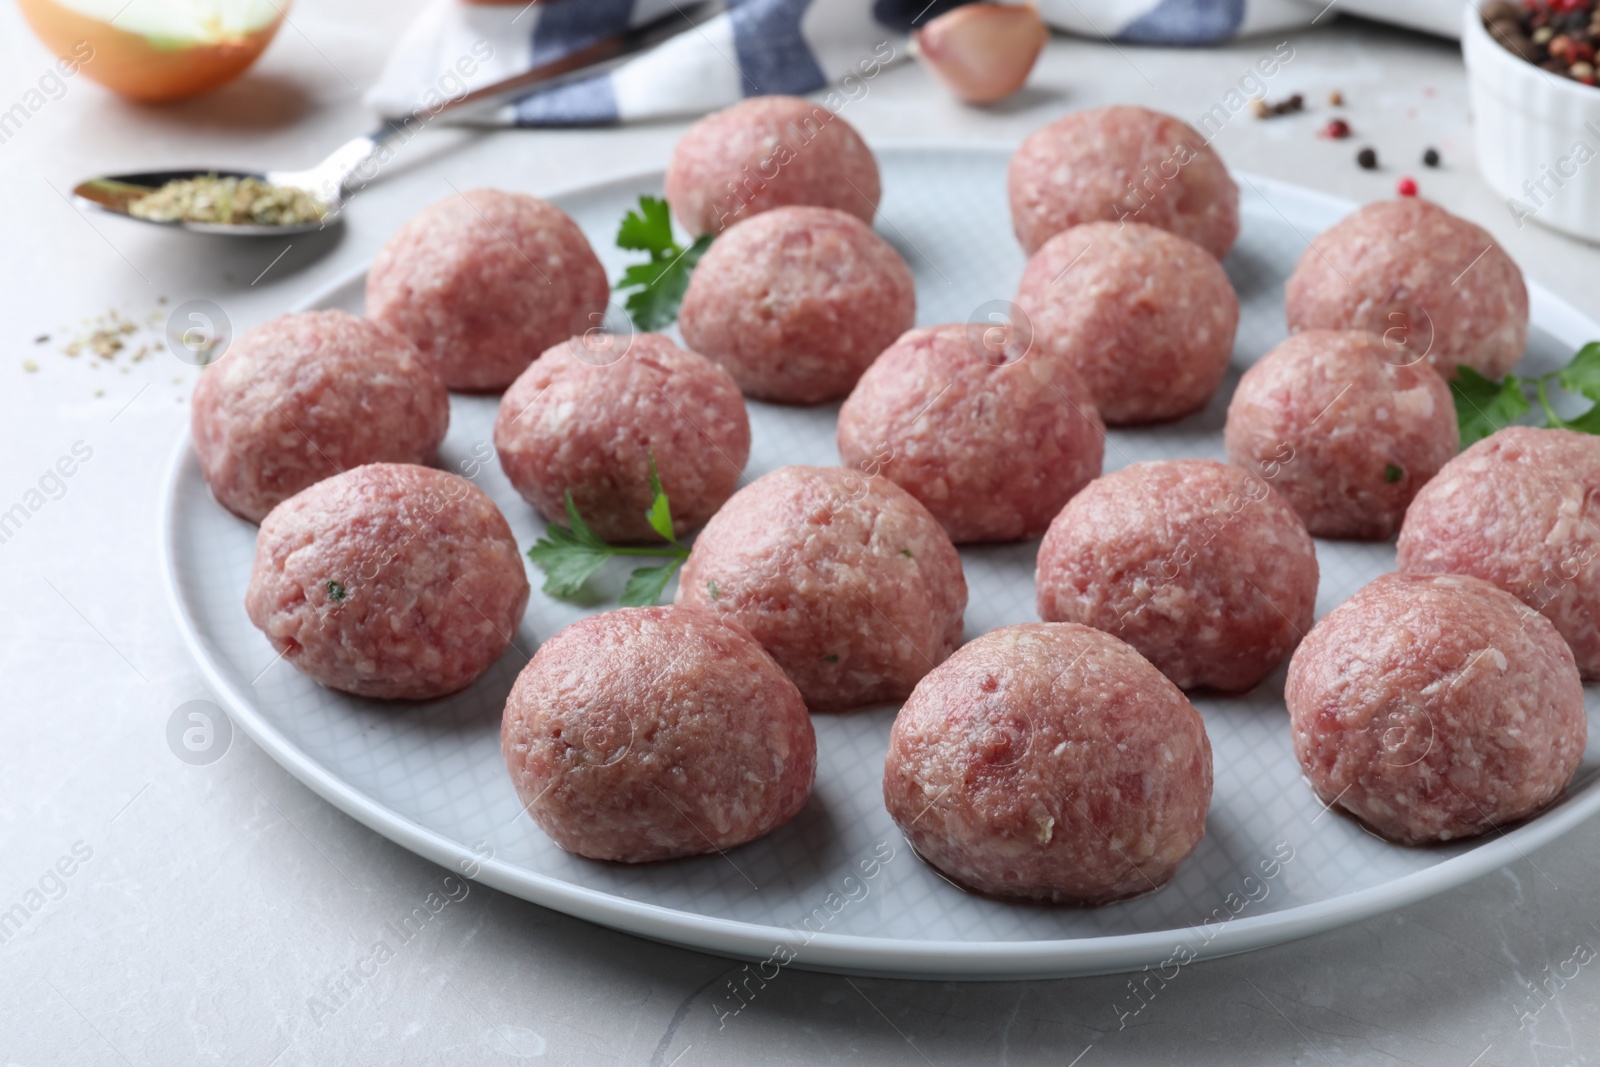 Photo of Many fresh raw meatballs on light table